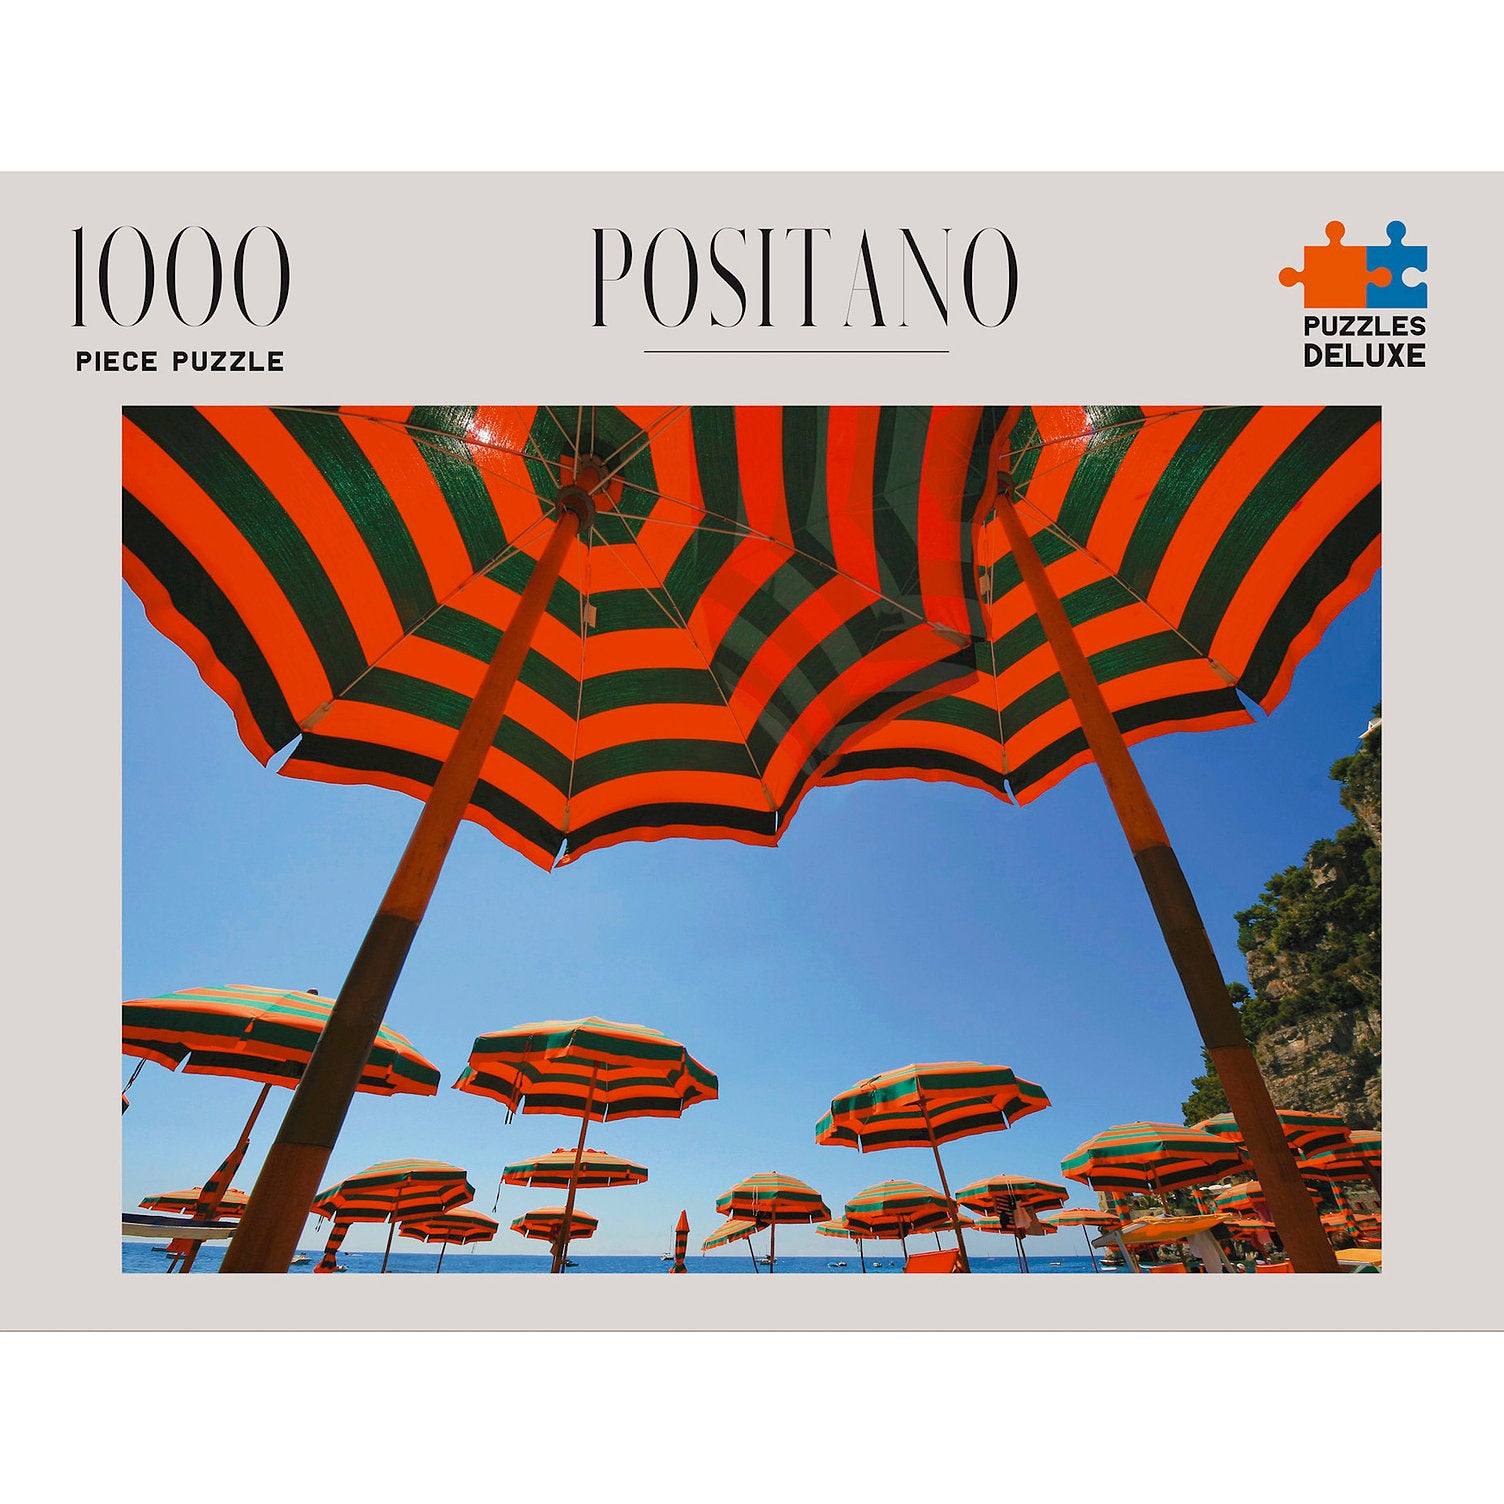 PUZZLES DELUXE 1000 Piece Jigsaw Puzzle - Positano, Italy